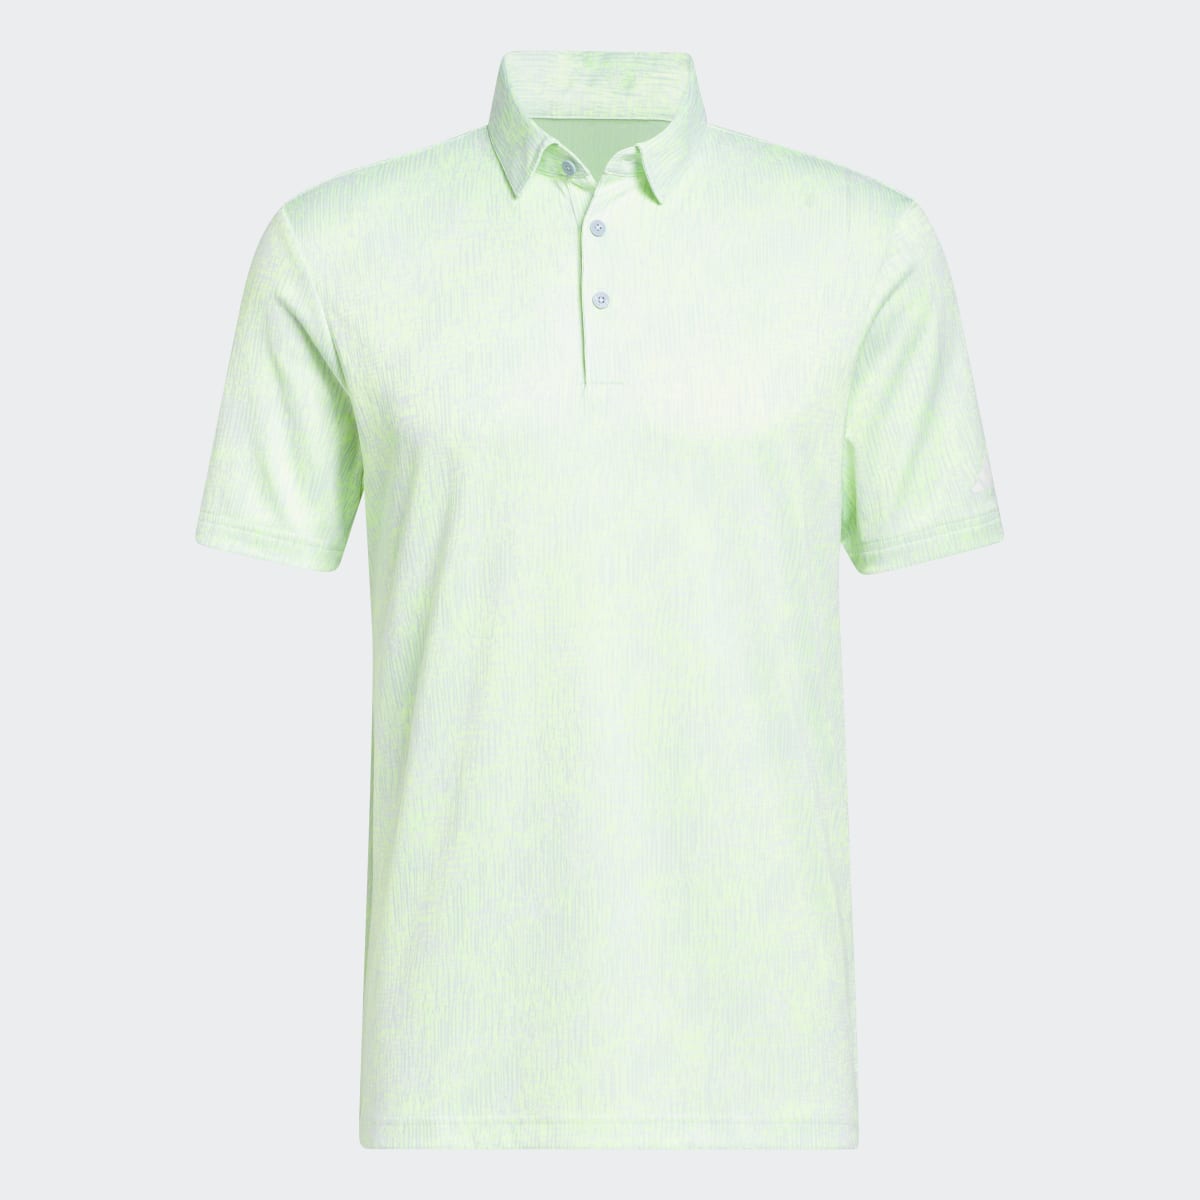 Adidas Aerial Jacquard Golf Polo Shirt. 5